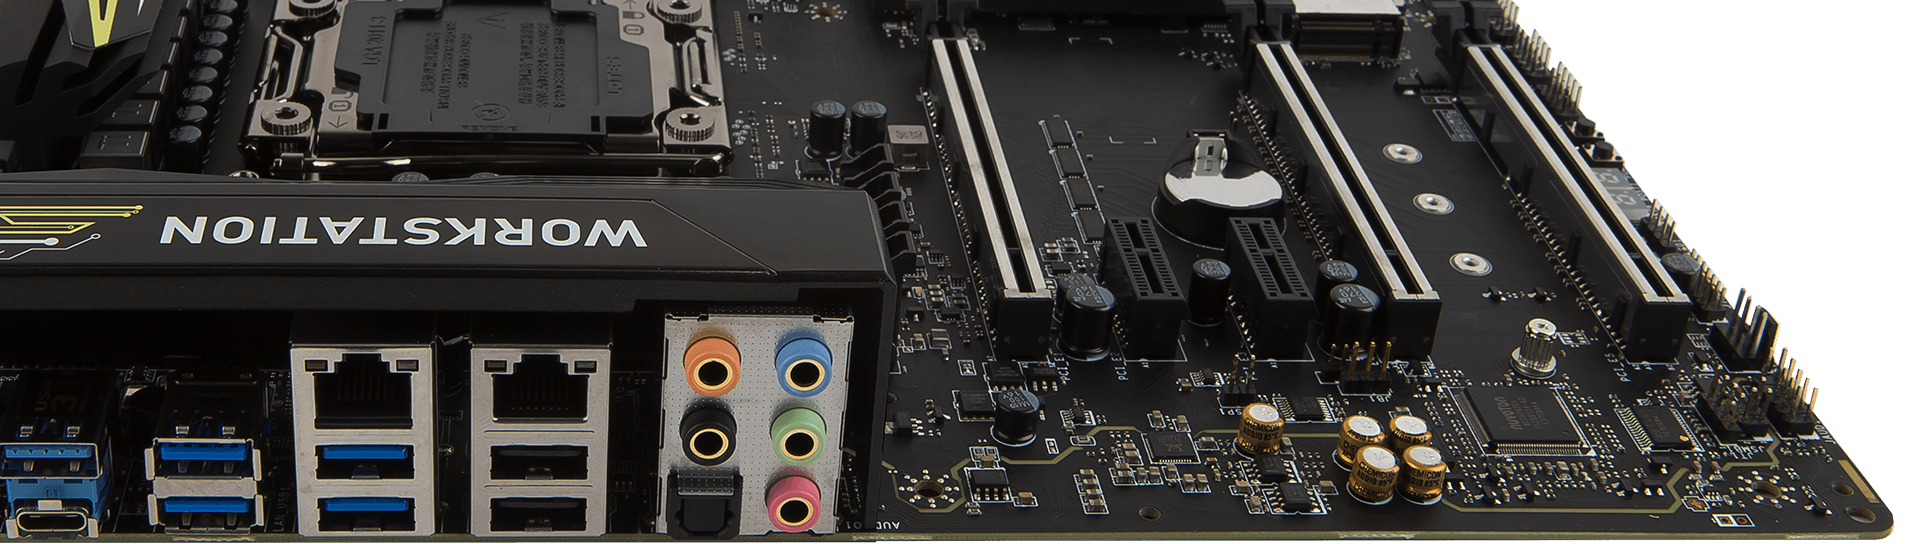 MSI X99A Workstation Intel Socket LGA2011 Extended ATX Motherboard